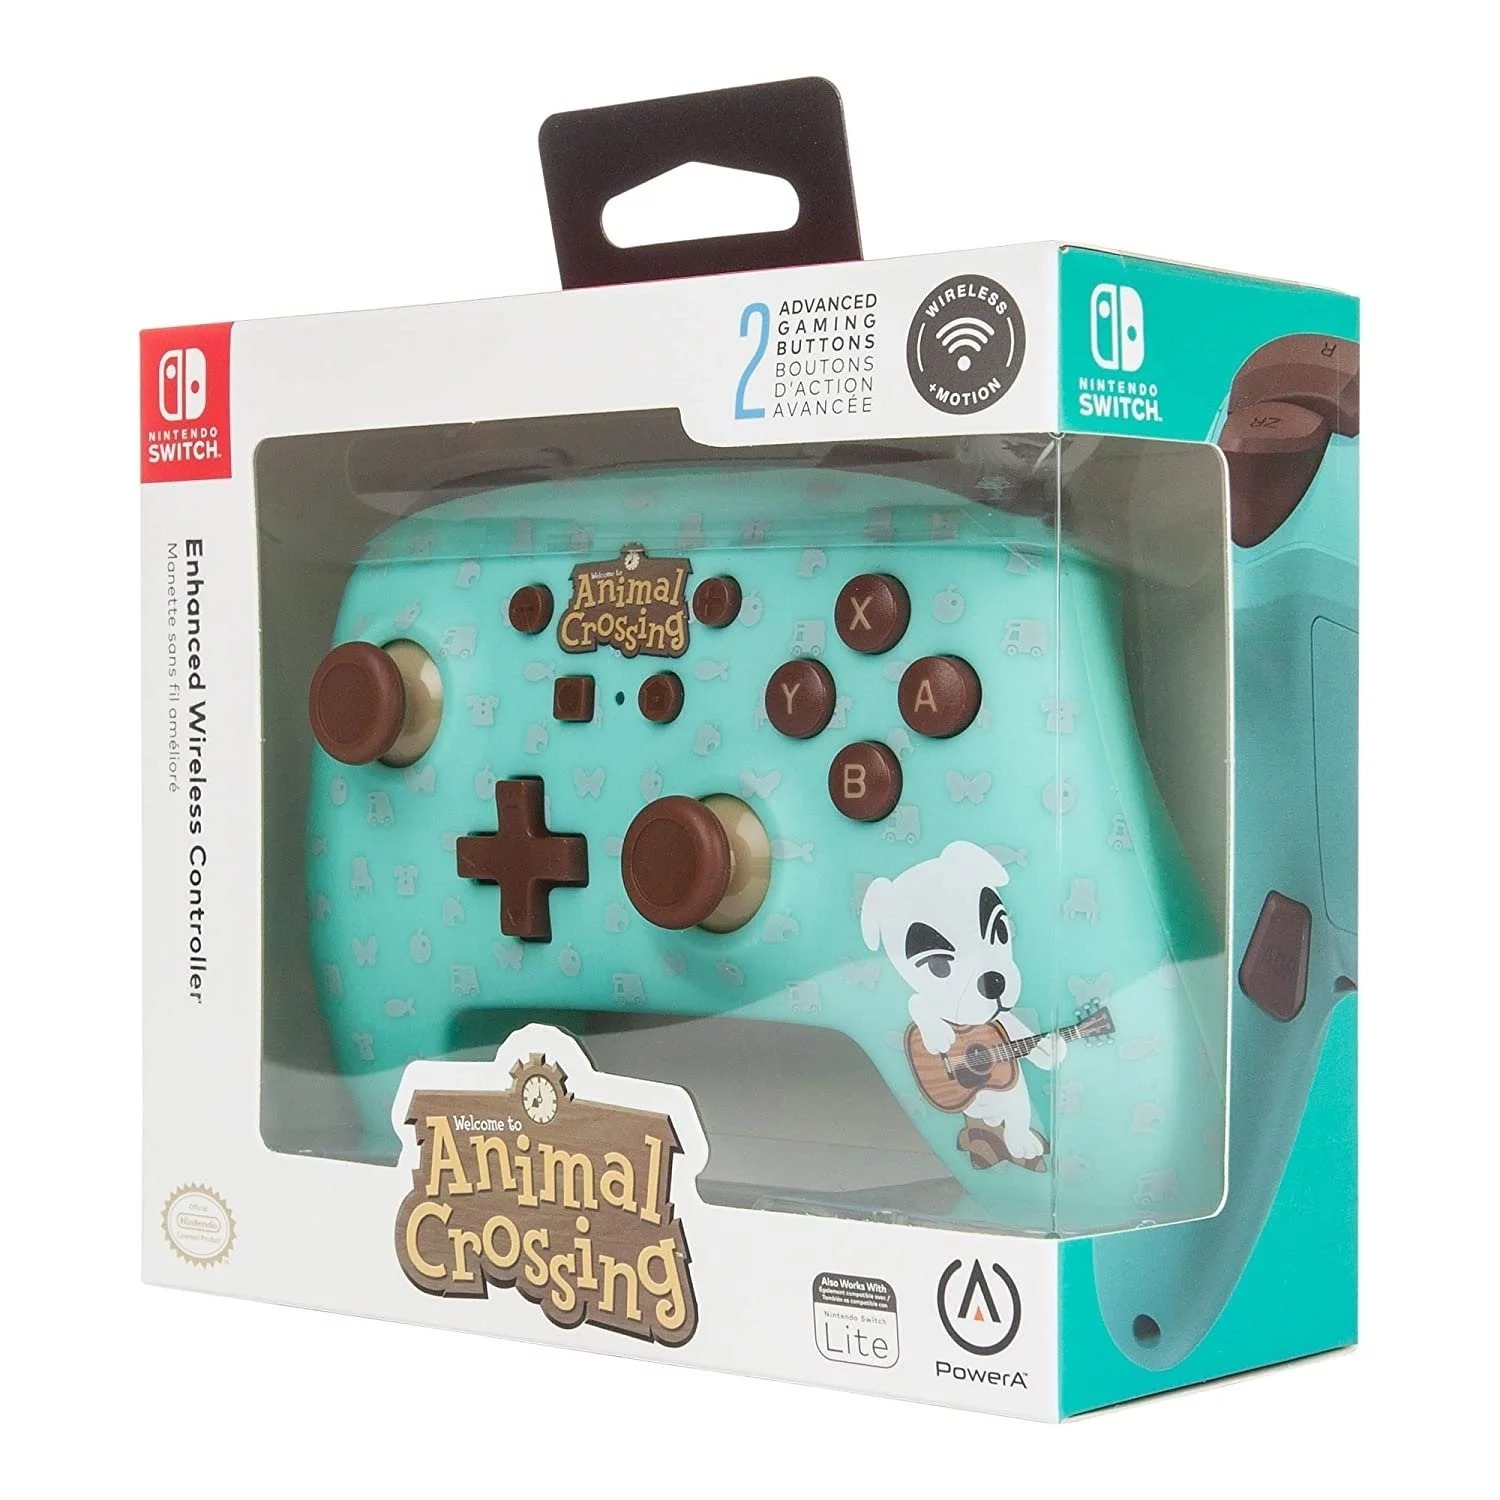 PowerA Enhanced Wireless Controller for Nintendo Switch - Animal Crossing: K.K. Slider 動物之森主題無線專業手掣 1